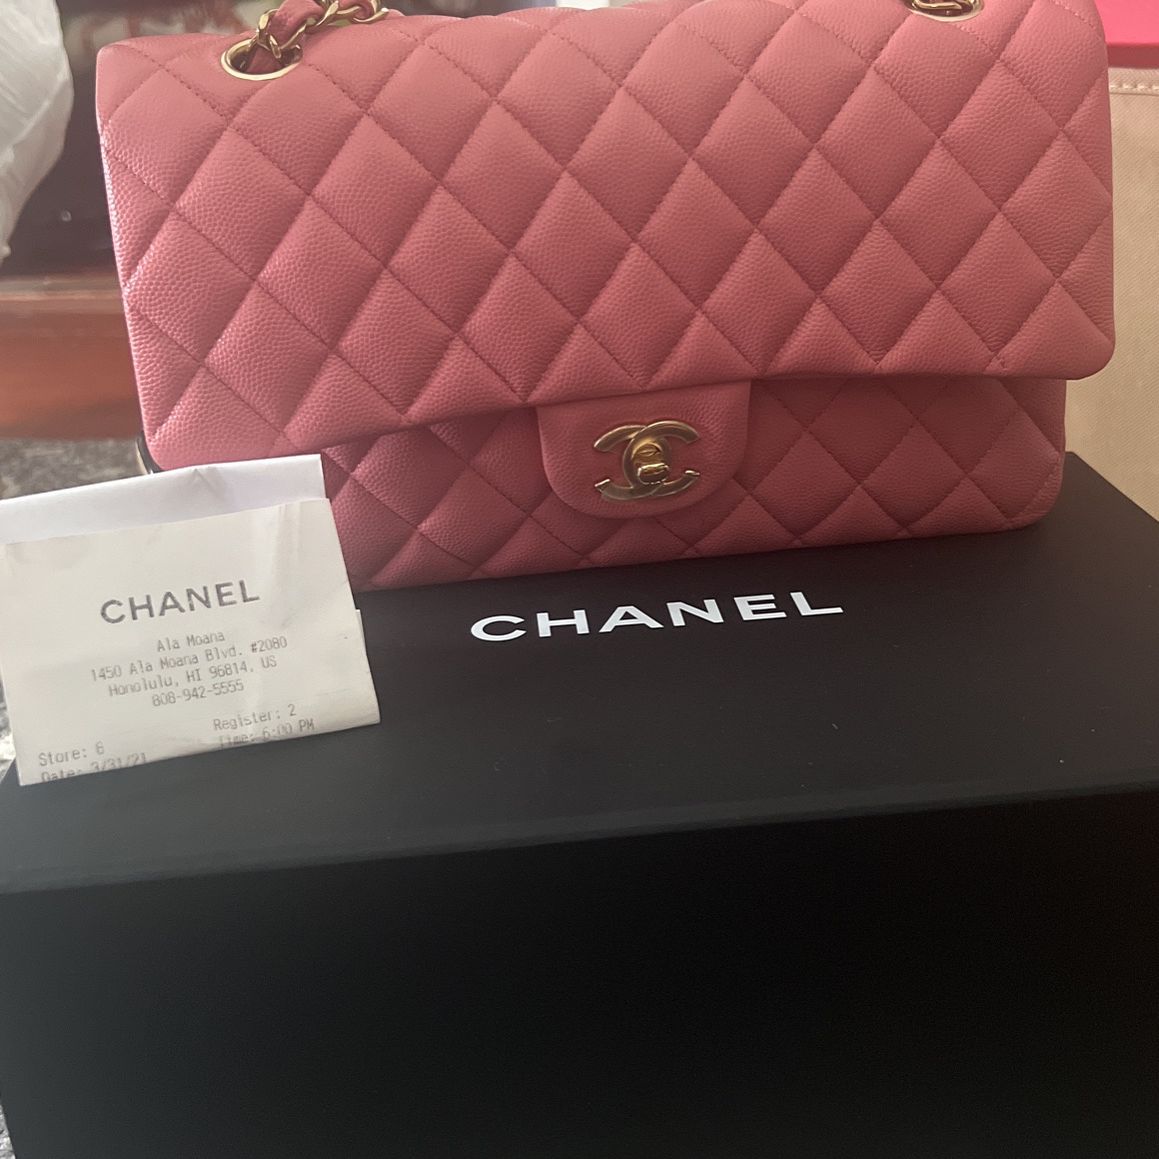 Chanel Flap Bag for Sale in Honolulu, HI - OfferUp